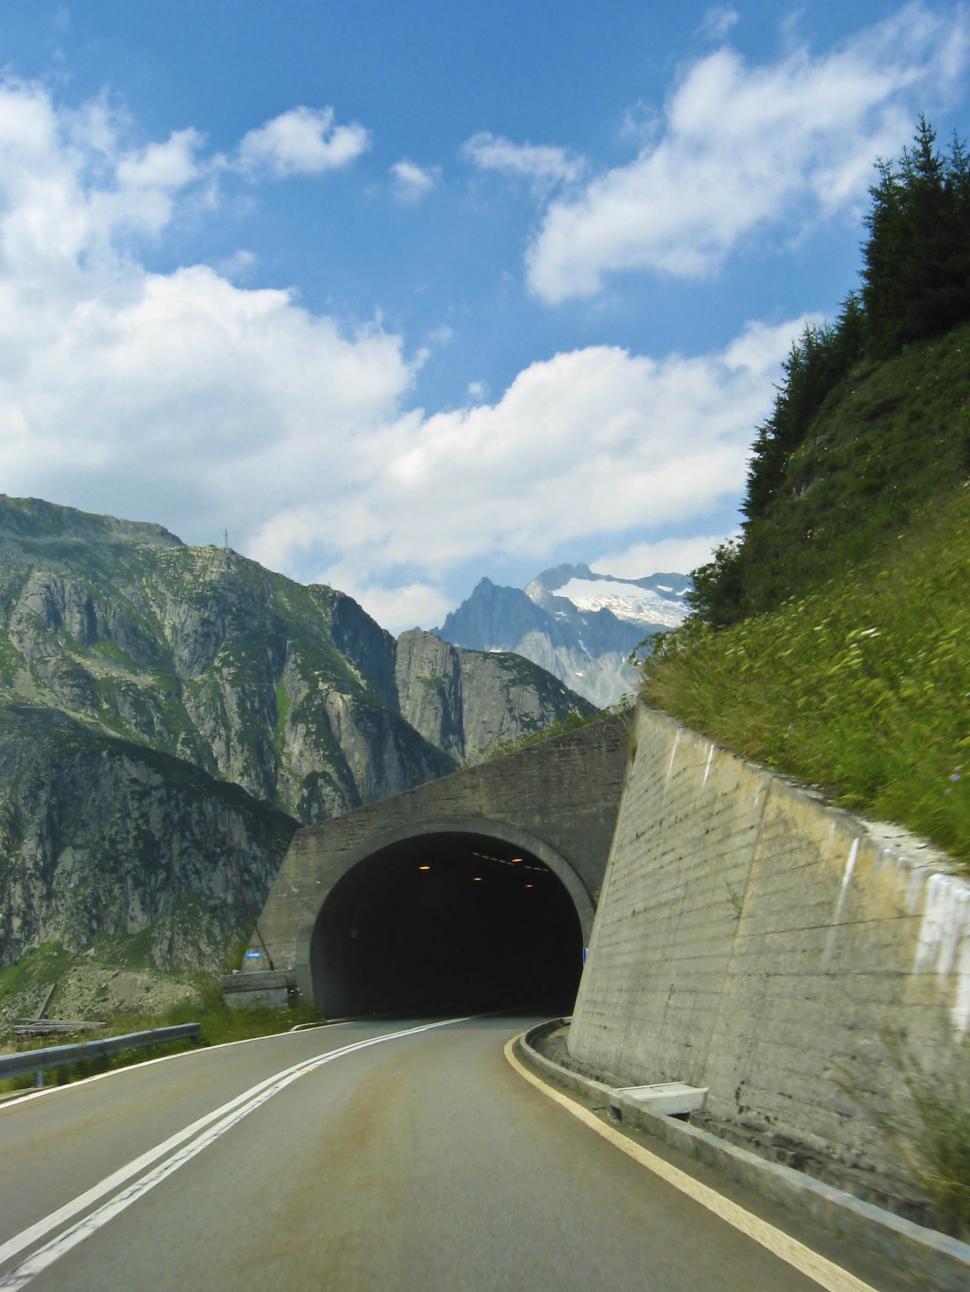 Download Free Stock Photo of Alpine countryside in Switzerland, Europe 